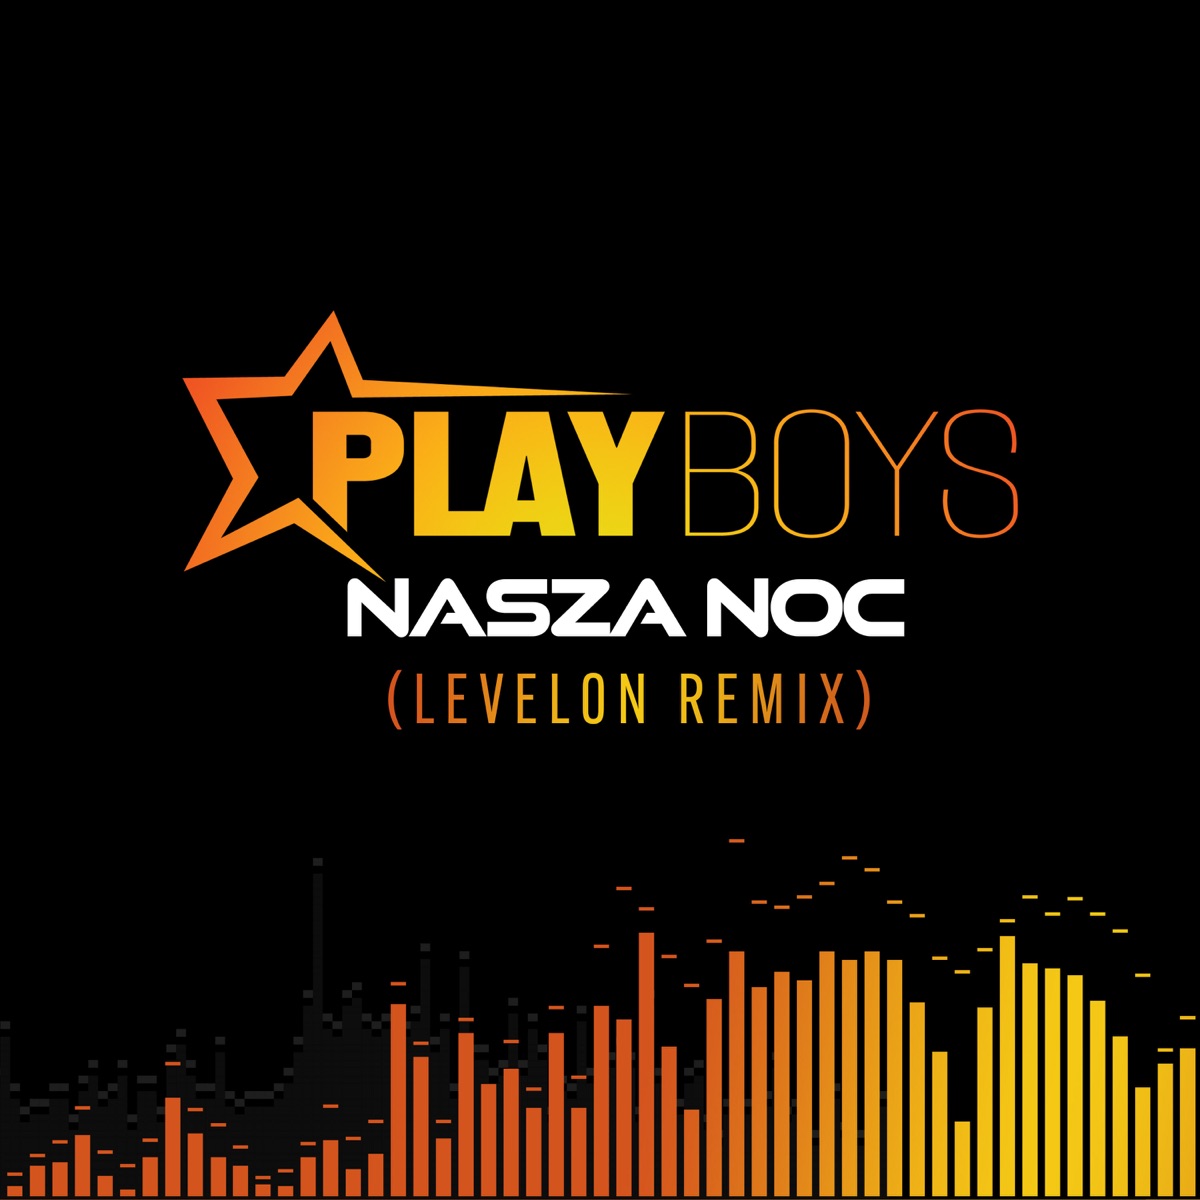 Nasza Noc (Levelon Remix) - Single - Album by Playboys - Apple Music